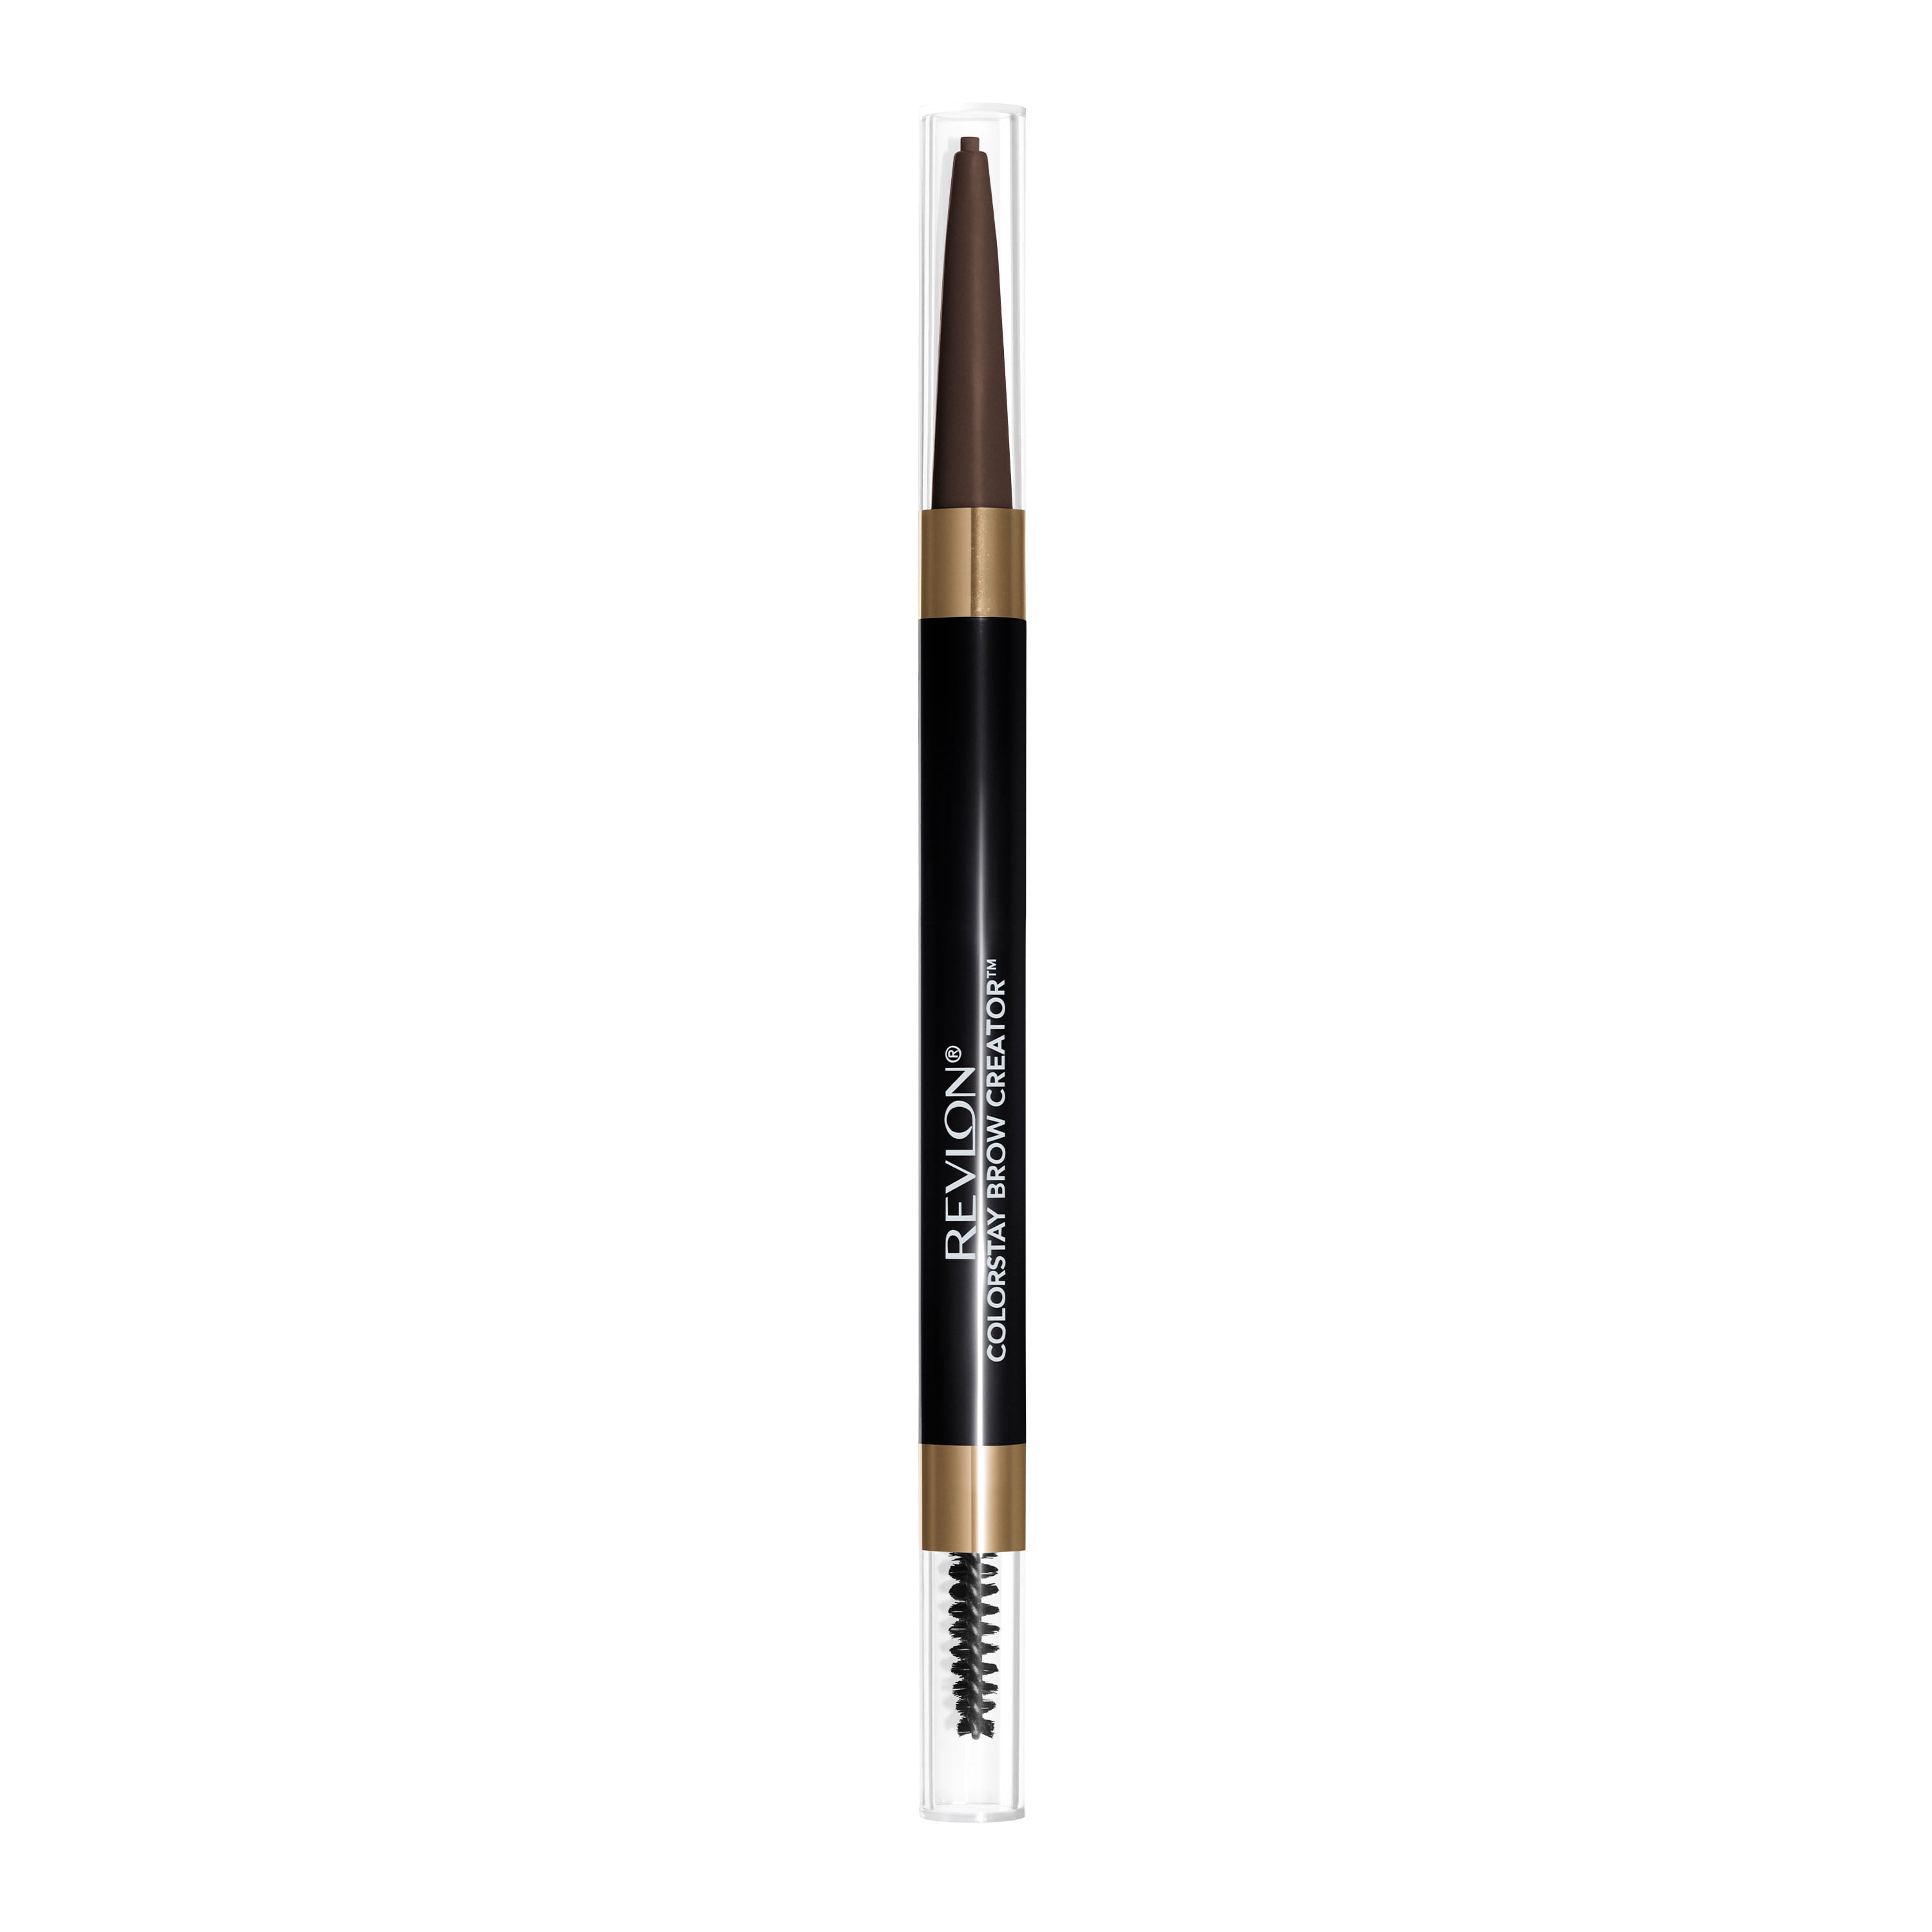 Revlon Eyebrow Pencil & Powder by Revlon, ColorStay Brow Creator 2-in-1 Eye Makeup with Spoolie, Longwearing with Precision Tip, 610 Dark Brown, 0.23 Oz, 610 Dark Brown, 0.01 oz